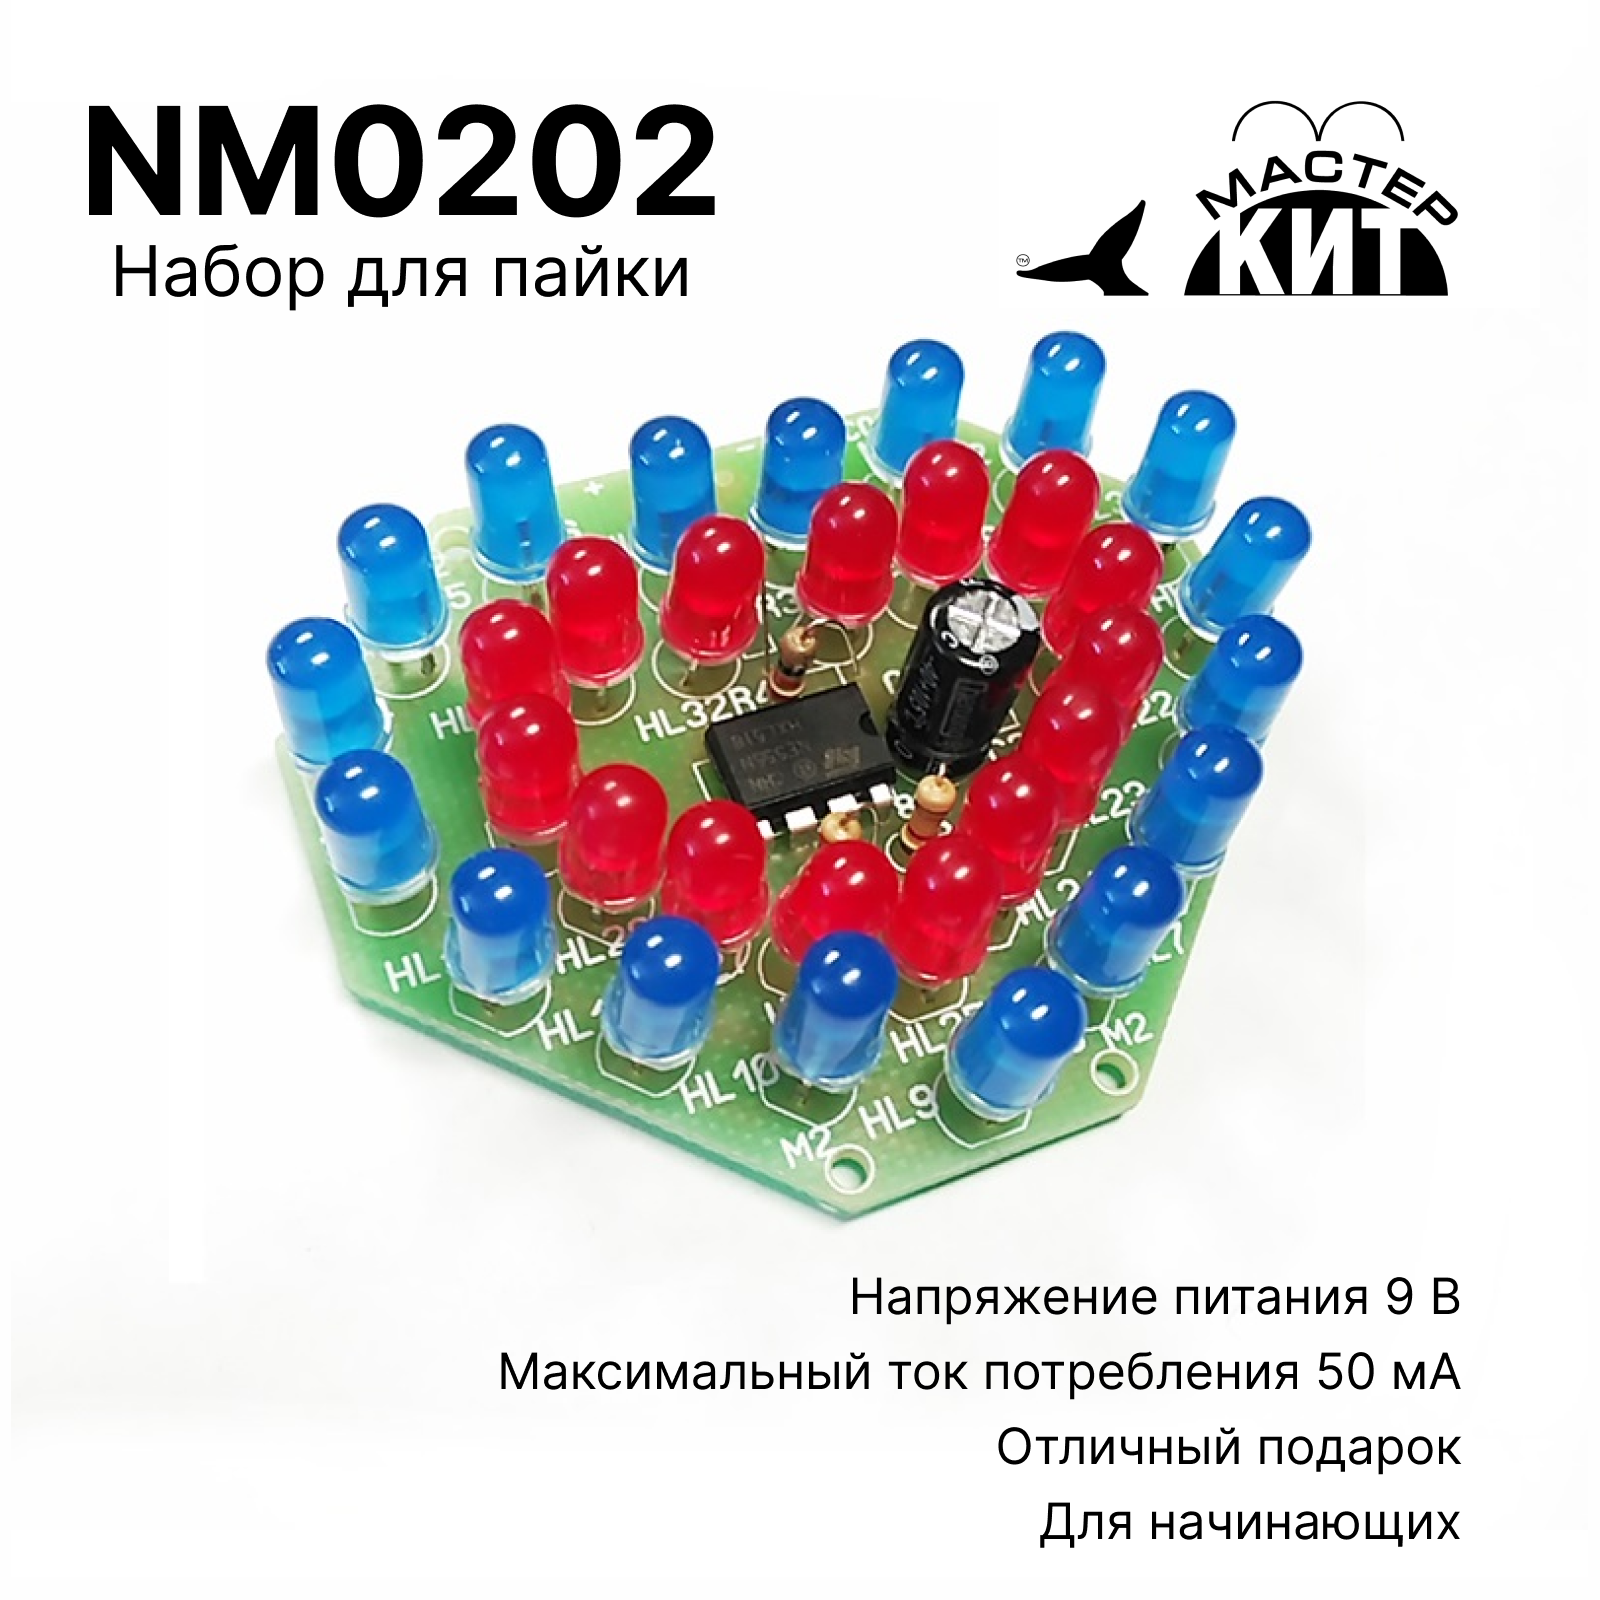 Электронный Мастер Кит NM0202 NM5050 электронный кухонный таймер соломон на магните 5 3 х 7 см